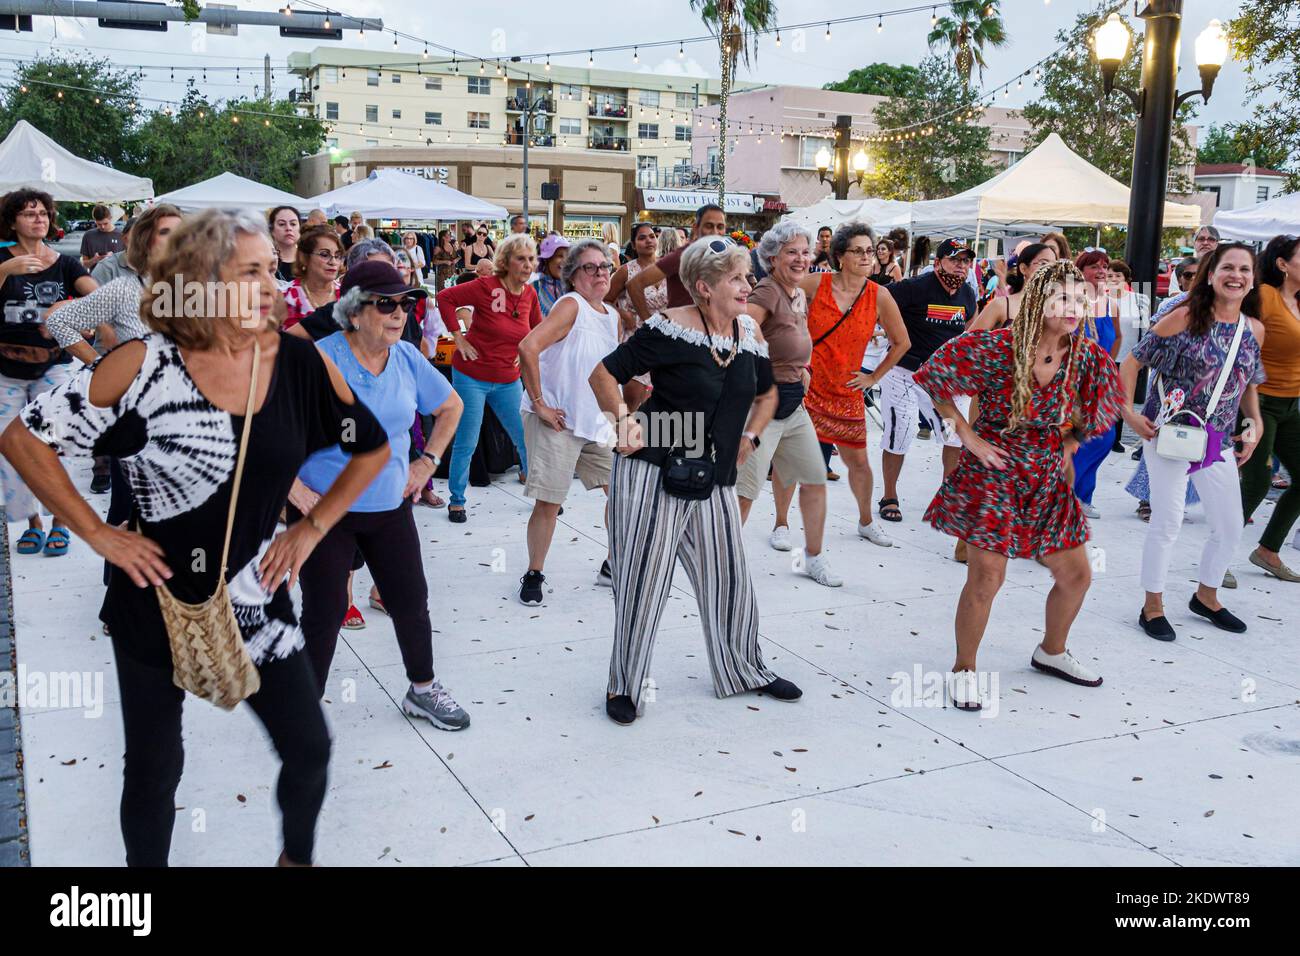 Miami Beach Florida, Normandia Isola Day of the Dead Salsa Party, Zumba linea gruppo ballare ballerini divertimento, donna donna donna donna donna donna donna donna donna coppia coppie adulti Foto Stock